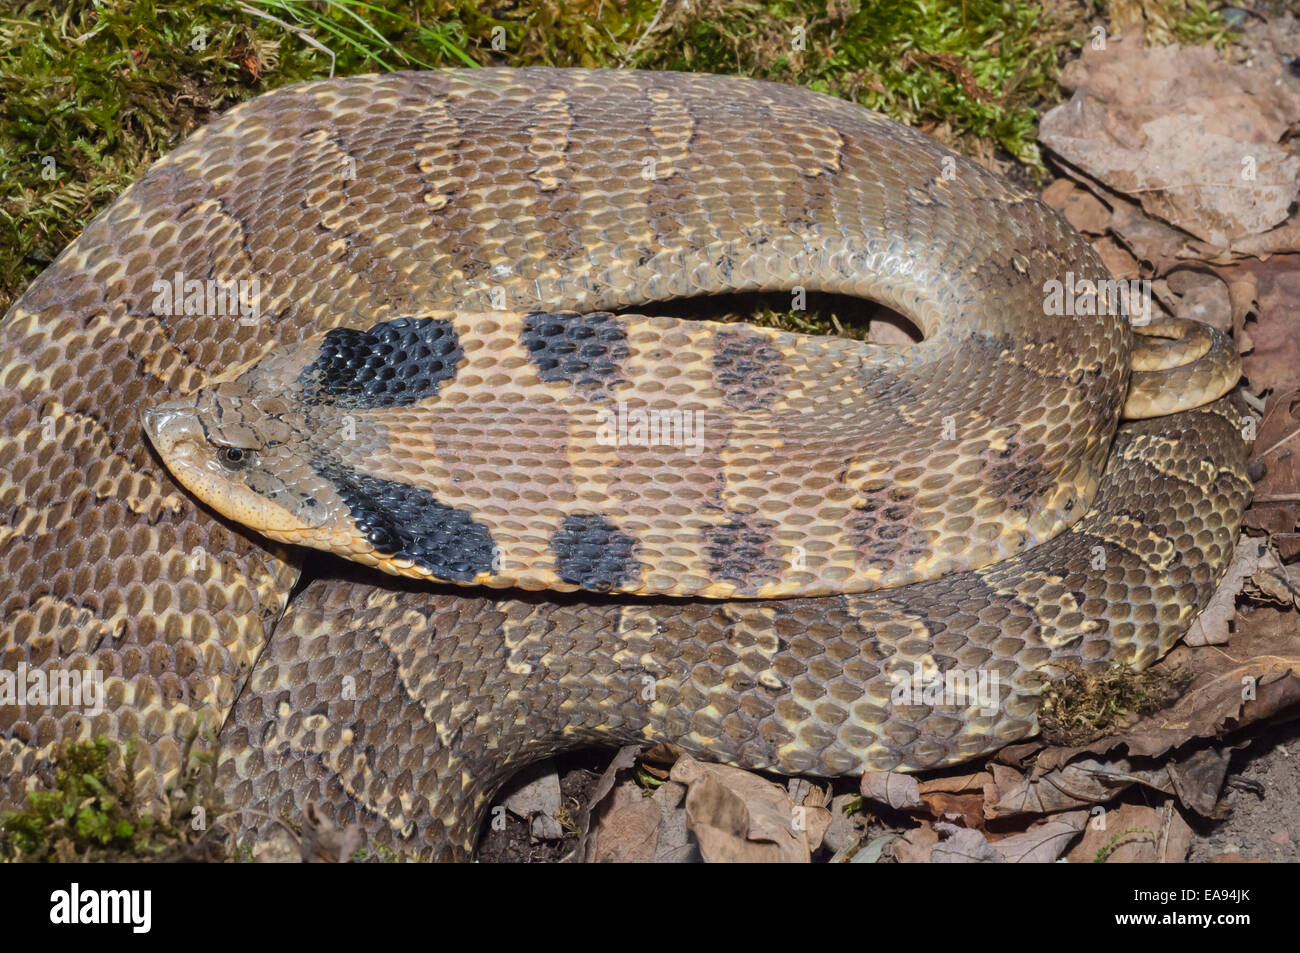 Eastern Hognose Snake - North Carolina